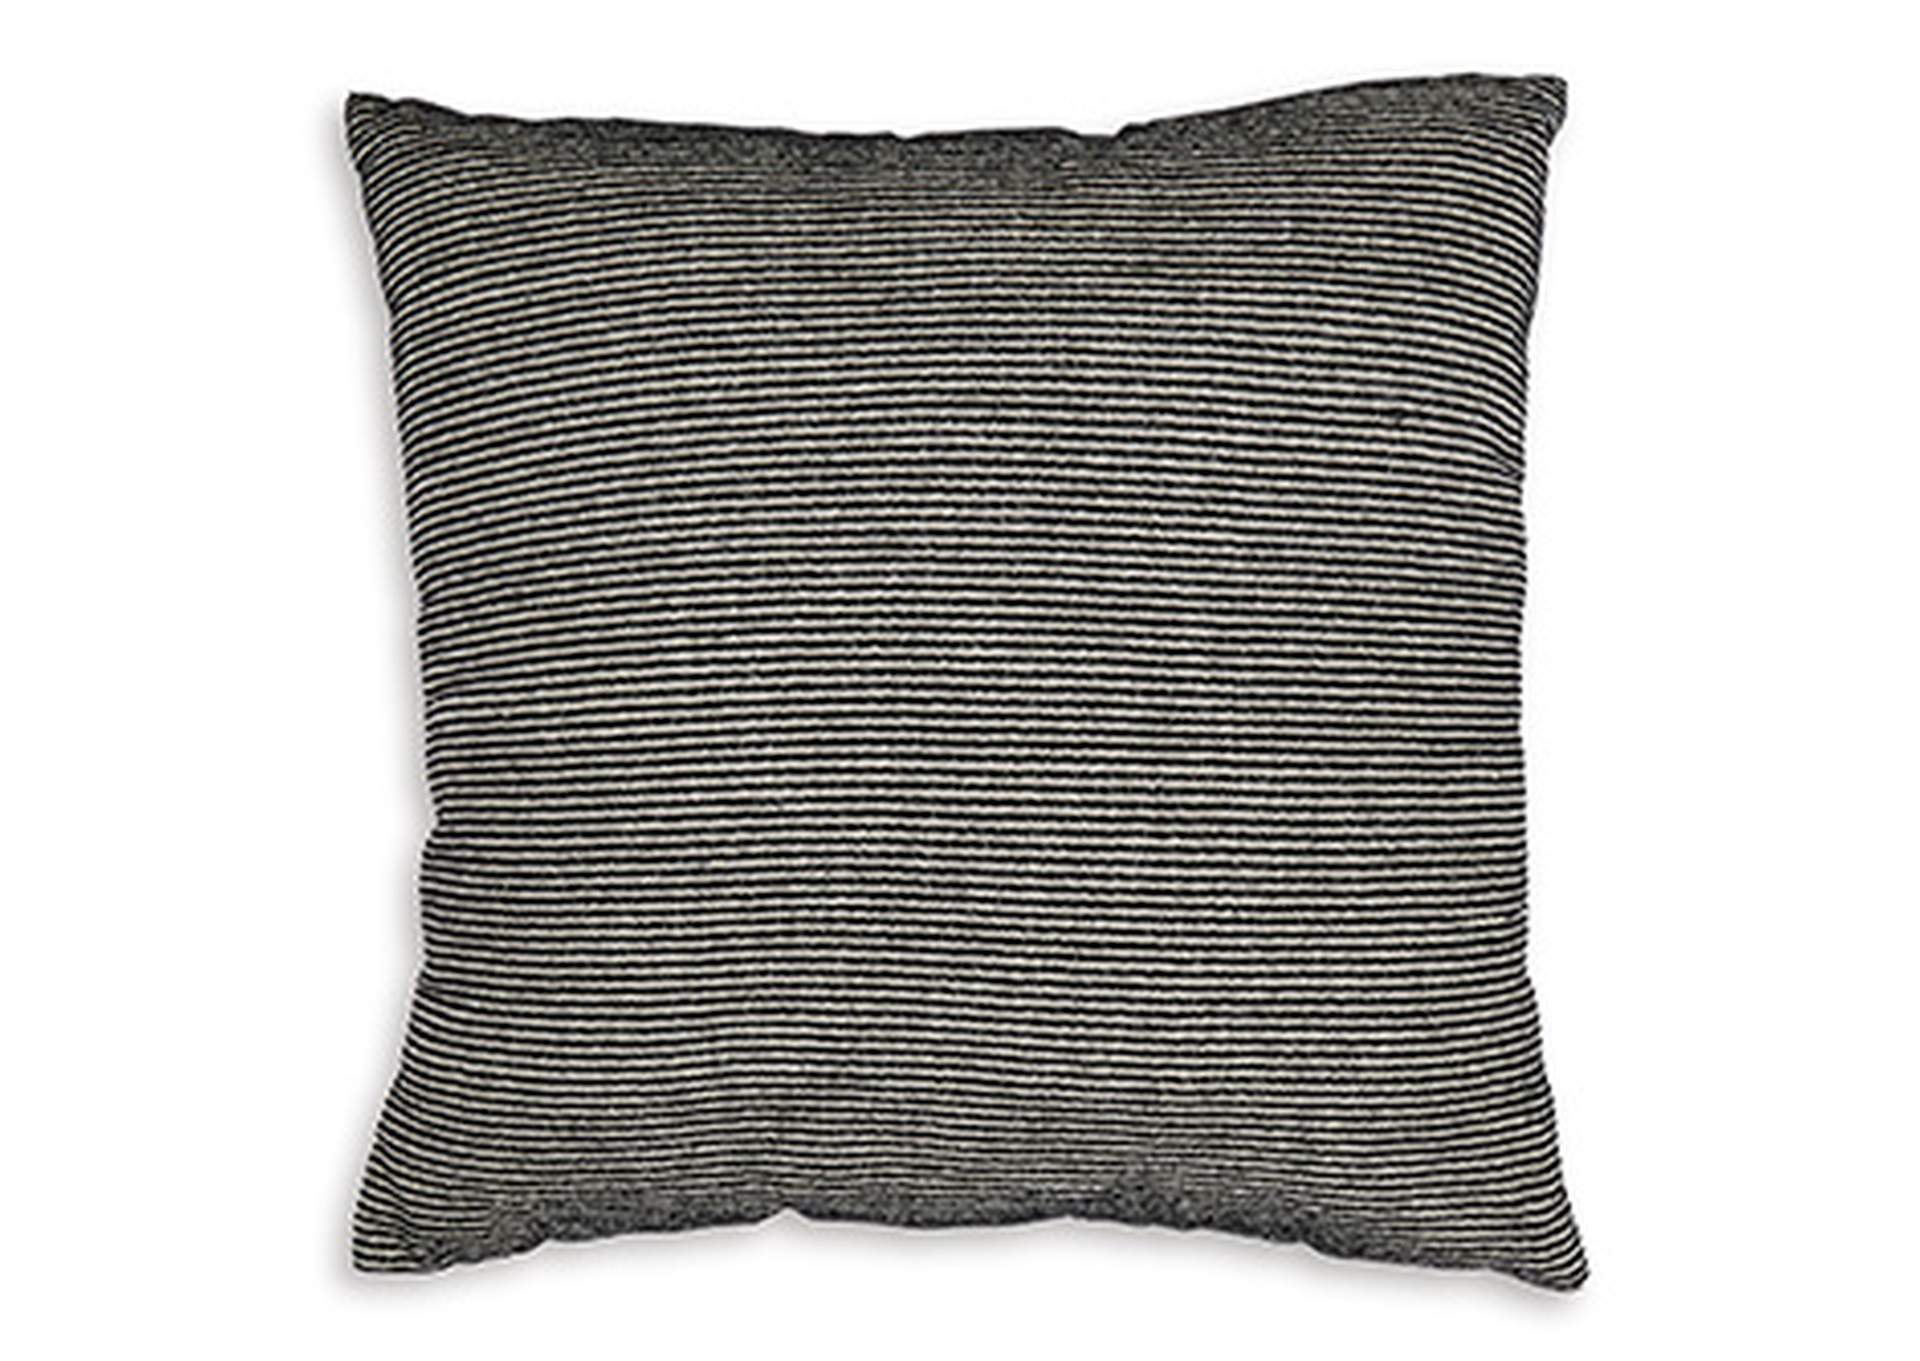 Edelmont Pillow,Signature Design By Ashley